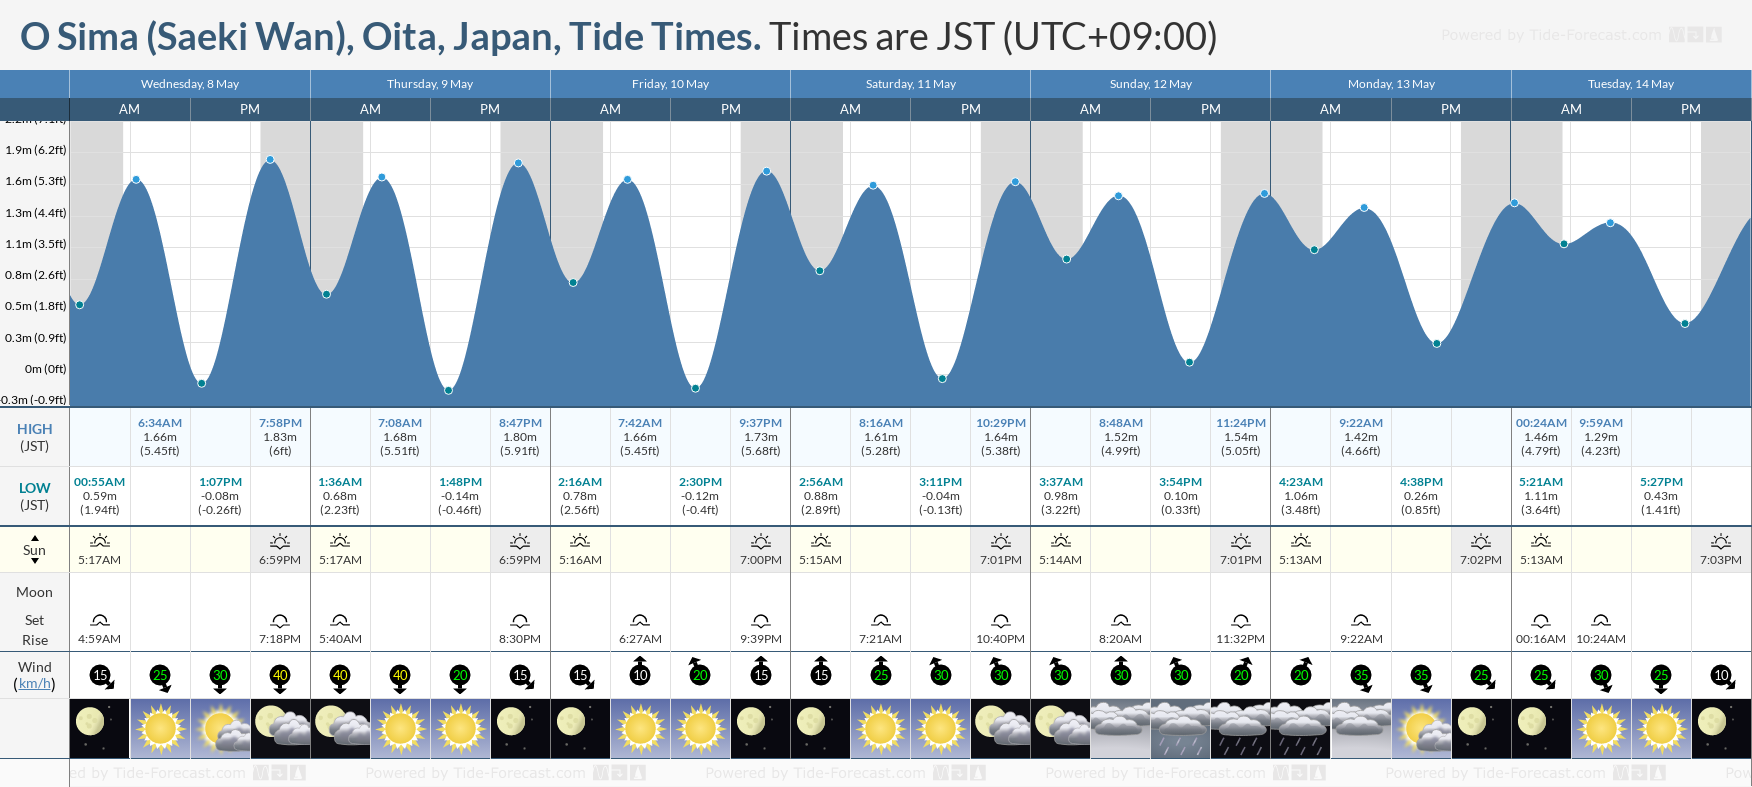 O Sima (Saeki Wan), Oita, Japan Tide Chart including high and low tide tide times for the next 7 days